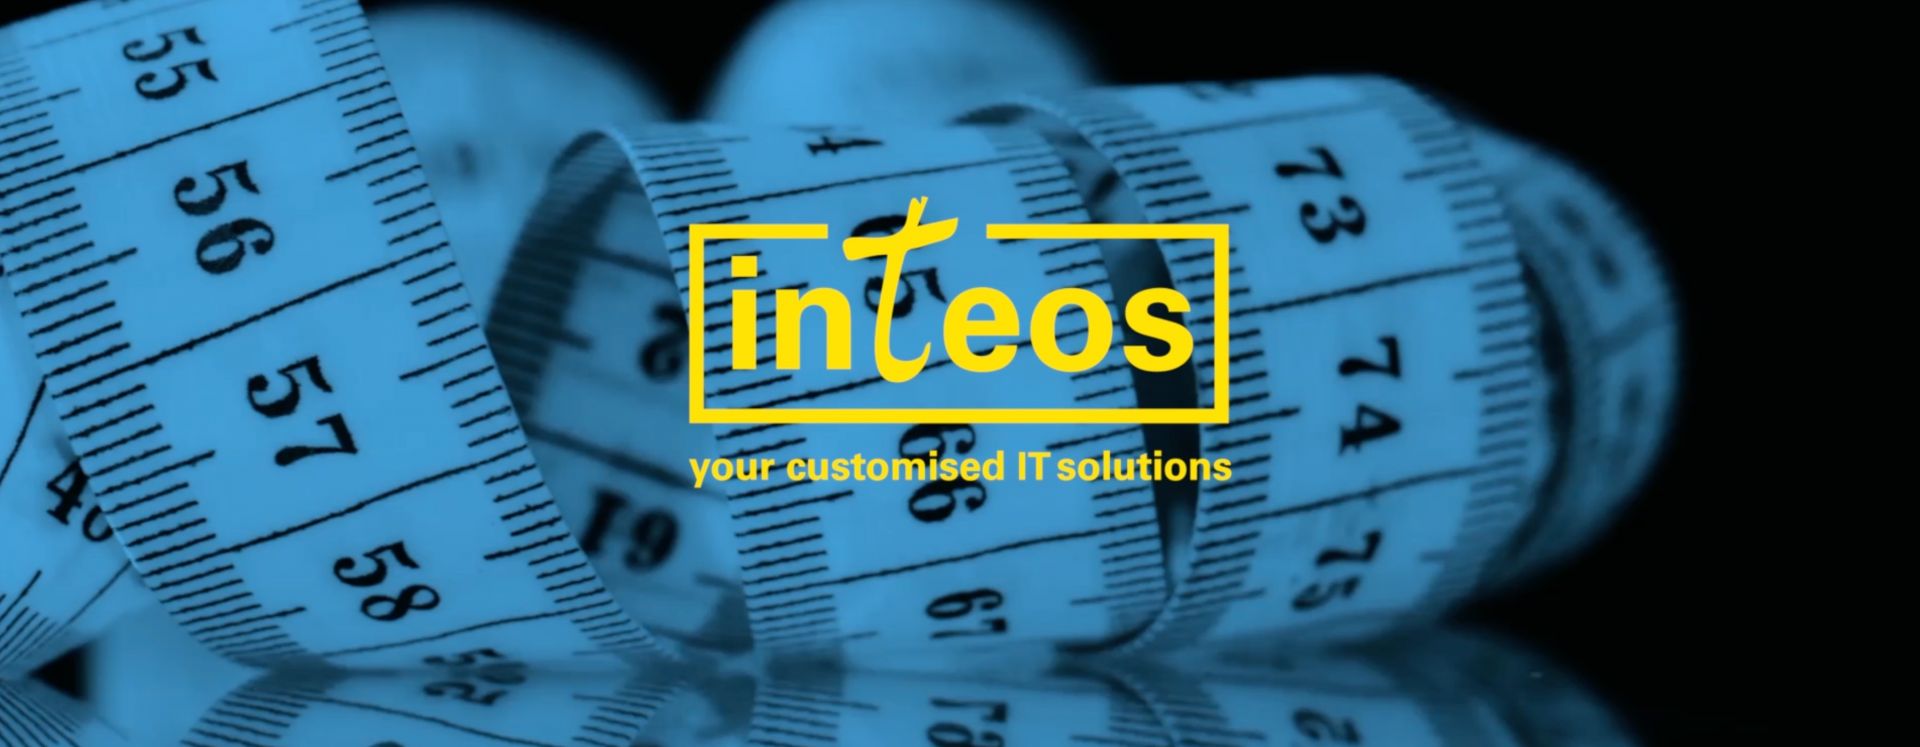 Custom-tailored MES hardware by inteos® 